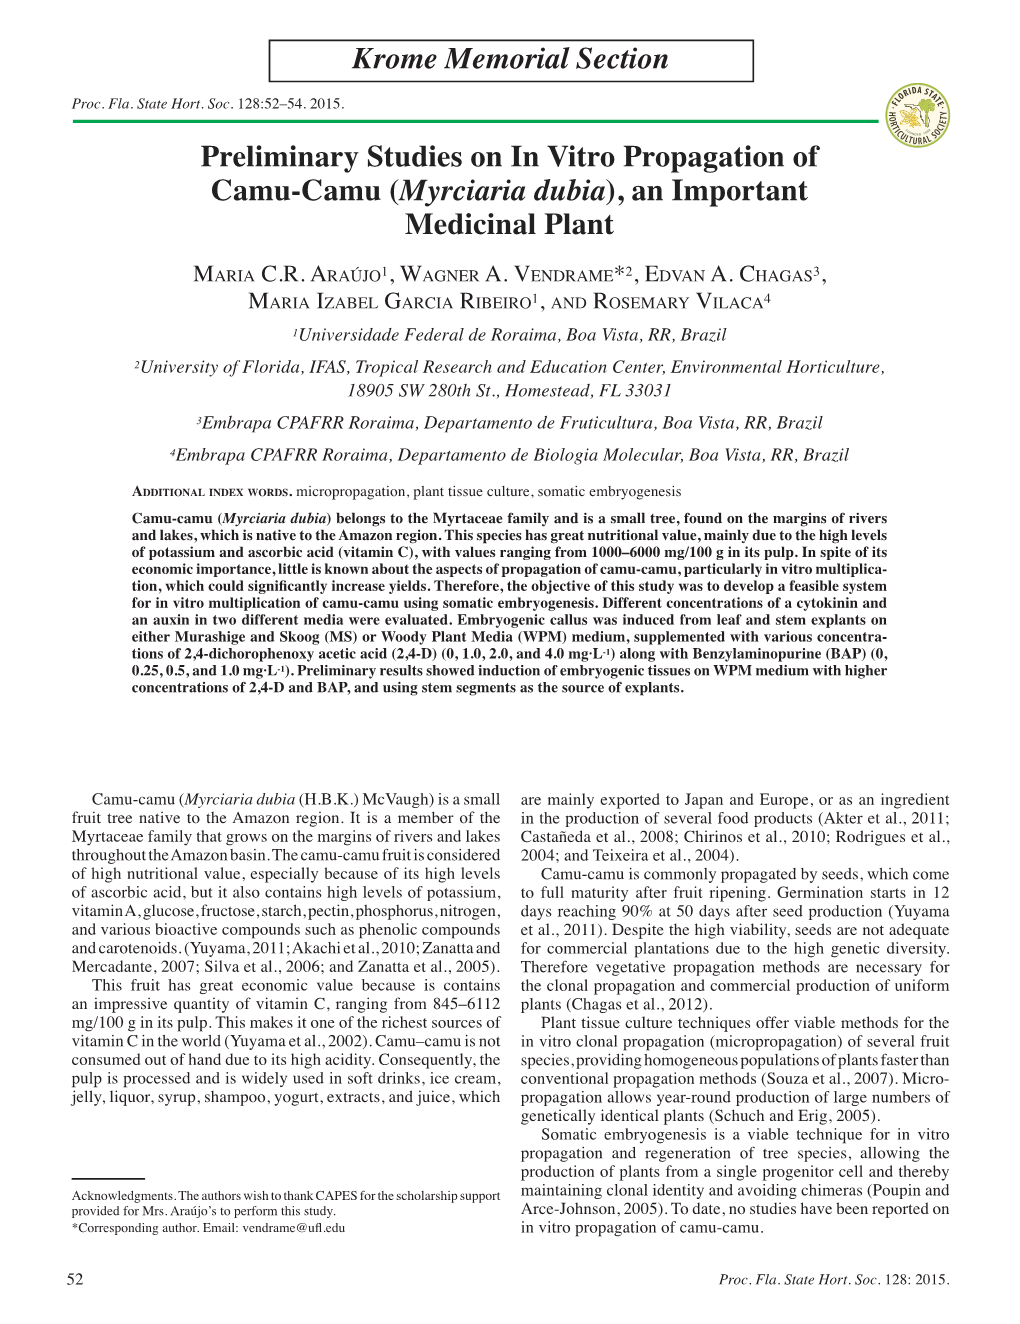 Preliminary Studies on in Vitro Propagation of Camu-Camu (Myrciaria Dubia), an Important Medicinal Plant